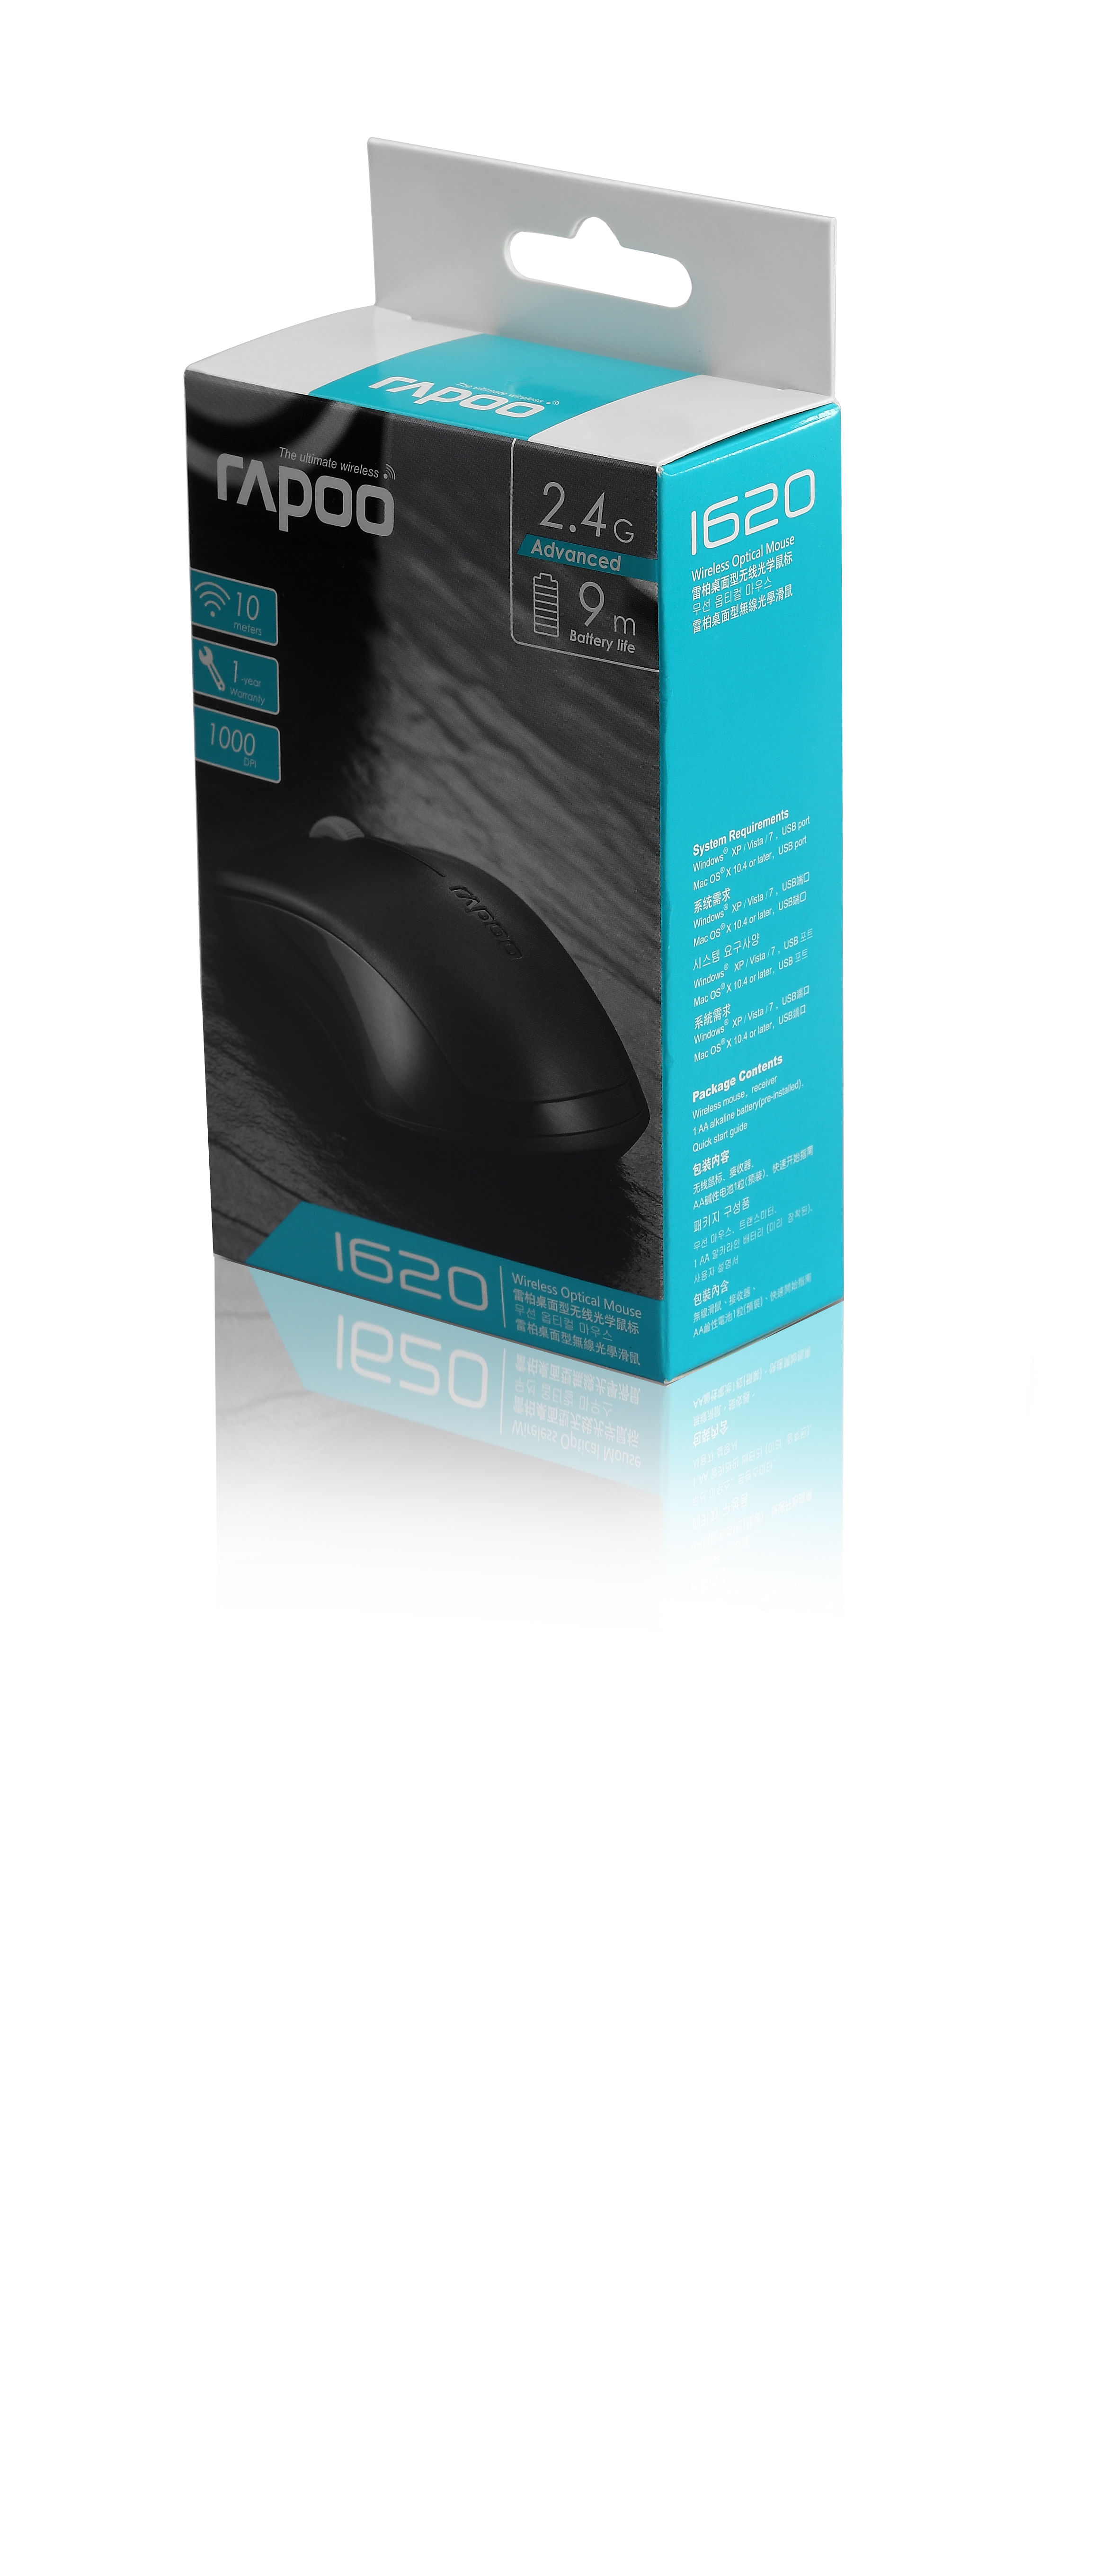 Rapoo 1620 Wireless Optical Mouse